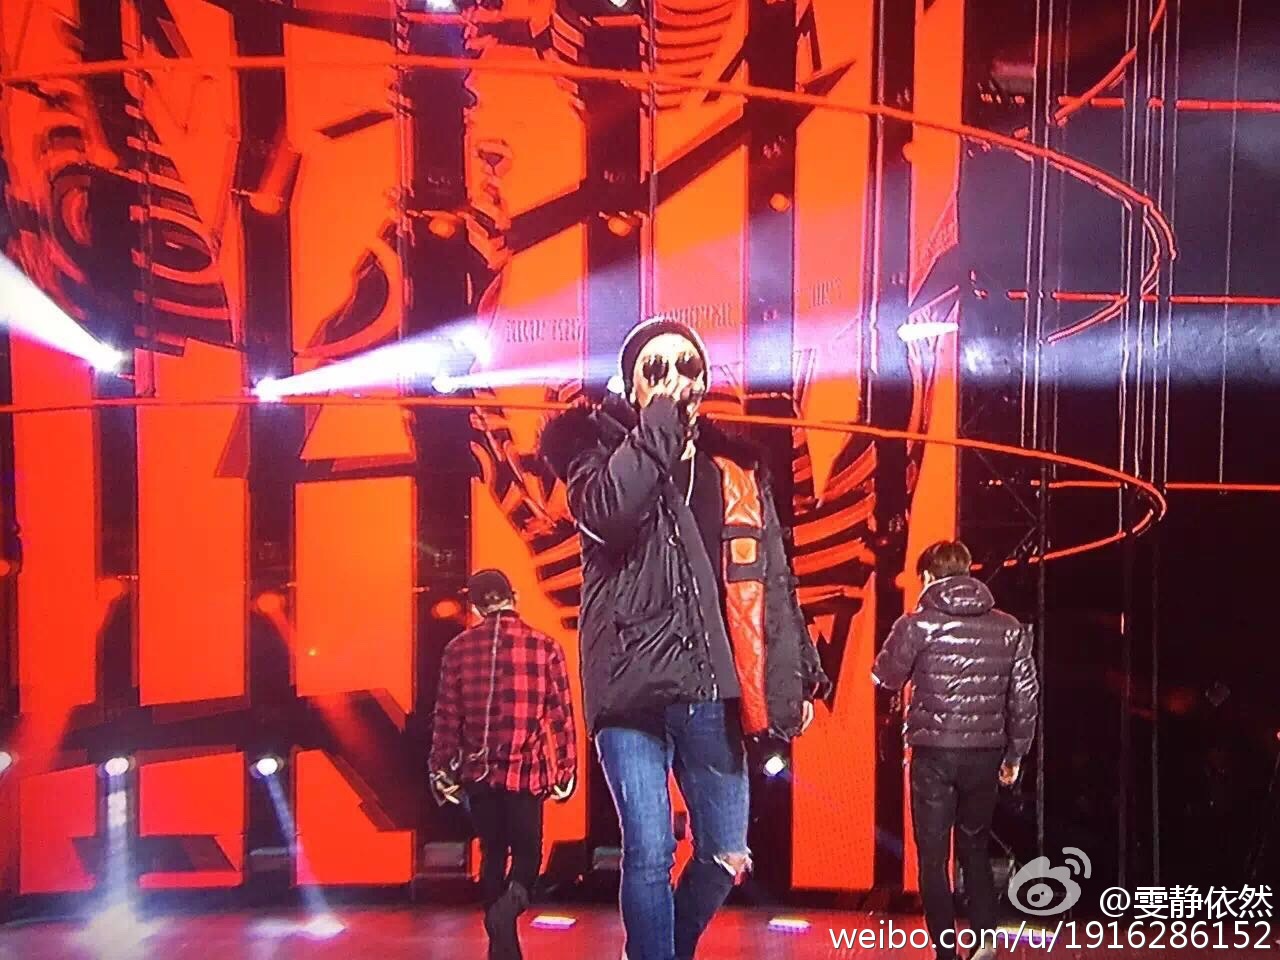 BIGBANG Rehearsals Hunan TV 31-12-2015 (7)